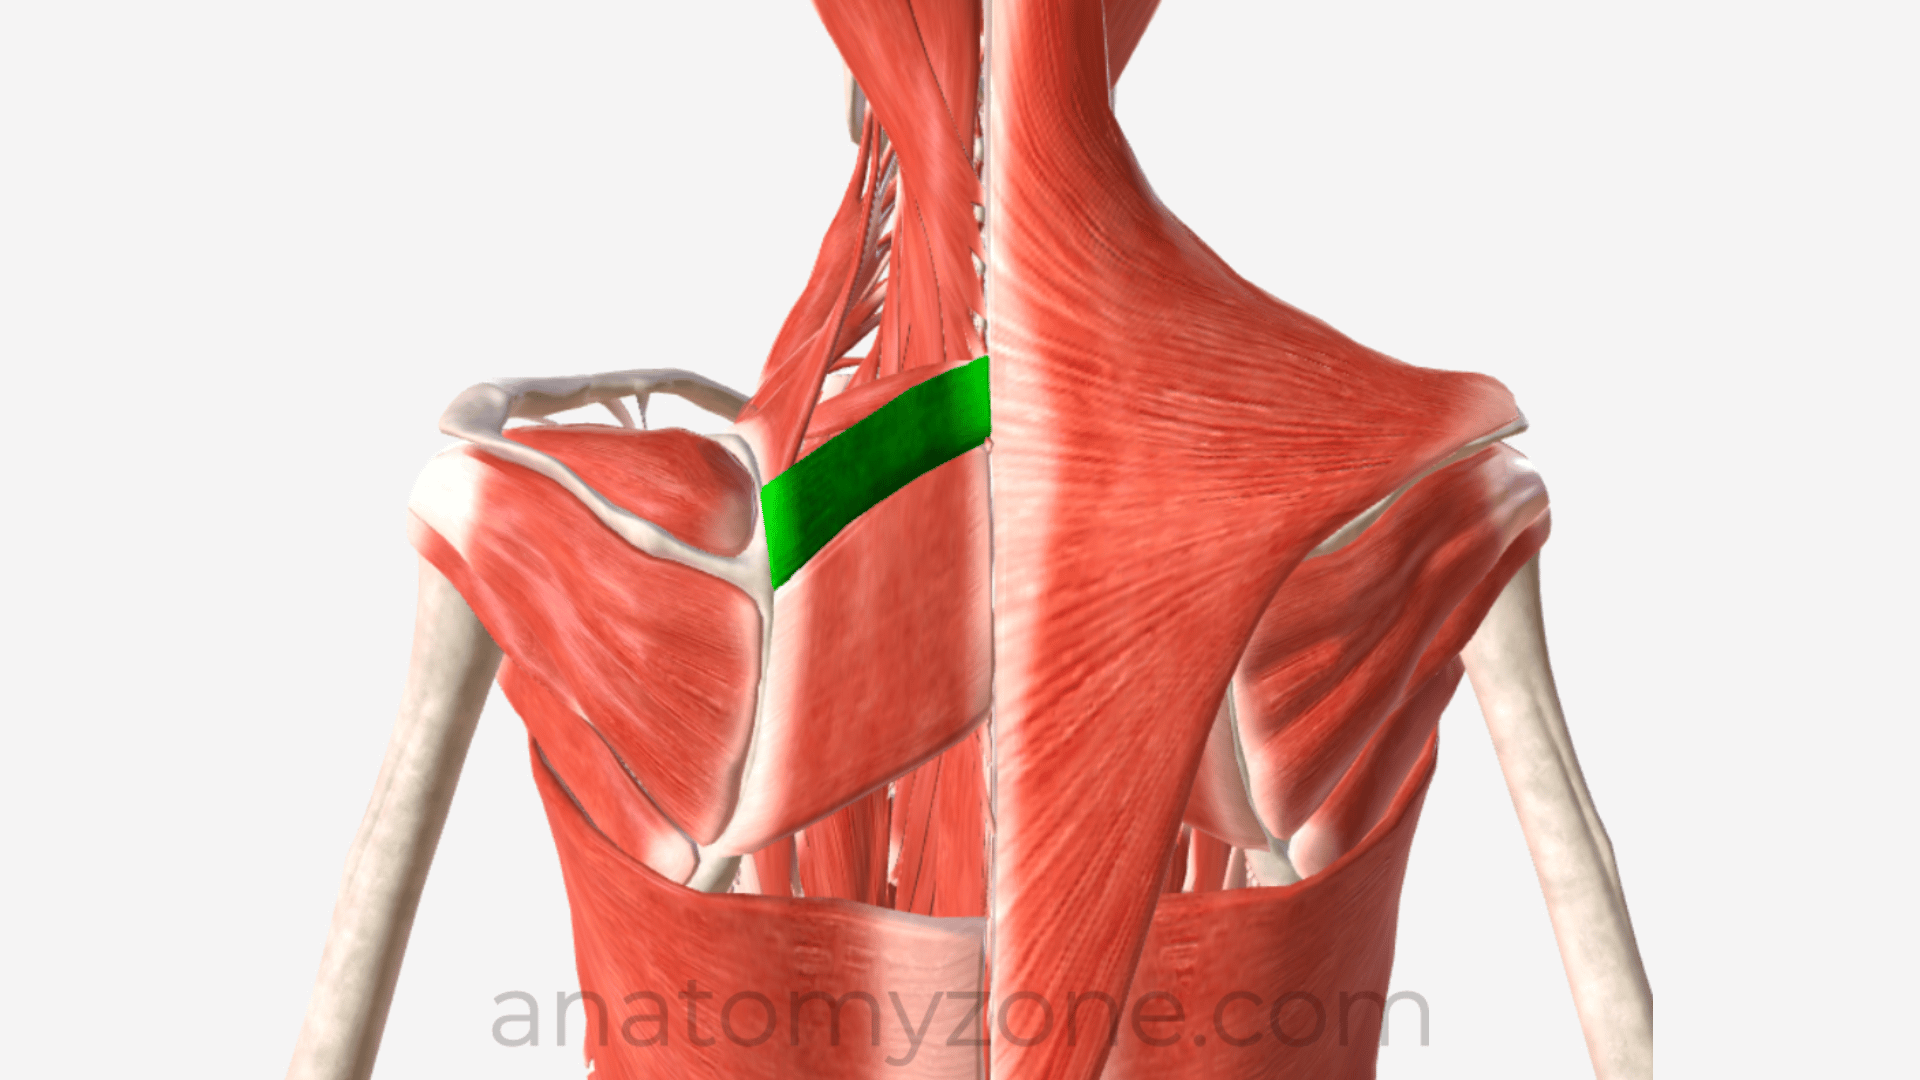 rhomboid minor muscle anatomy